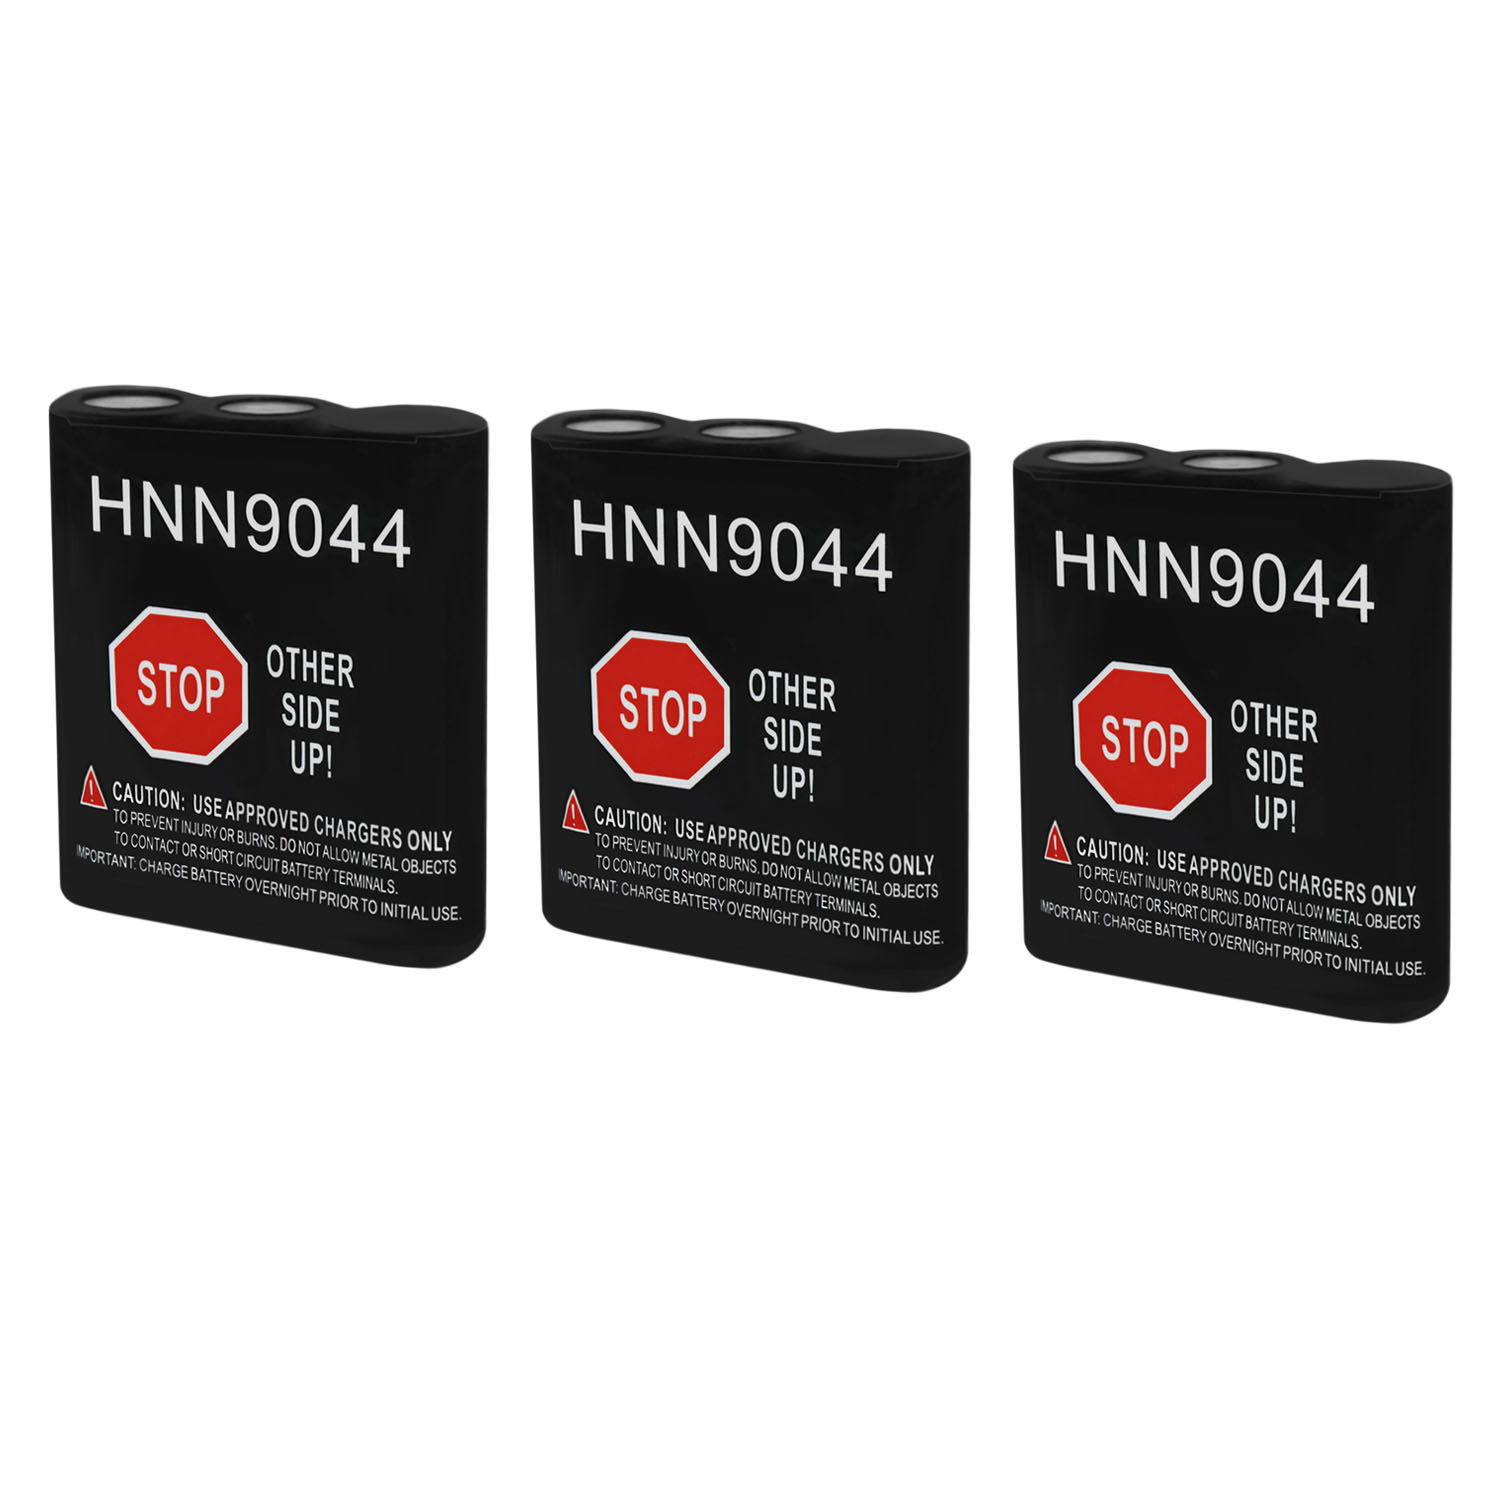 HNN9044 Battery for Motorola Radius 2 Way Radio - 3 Pack